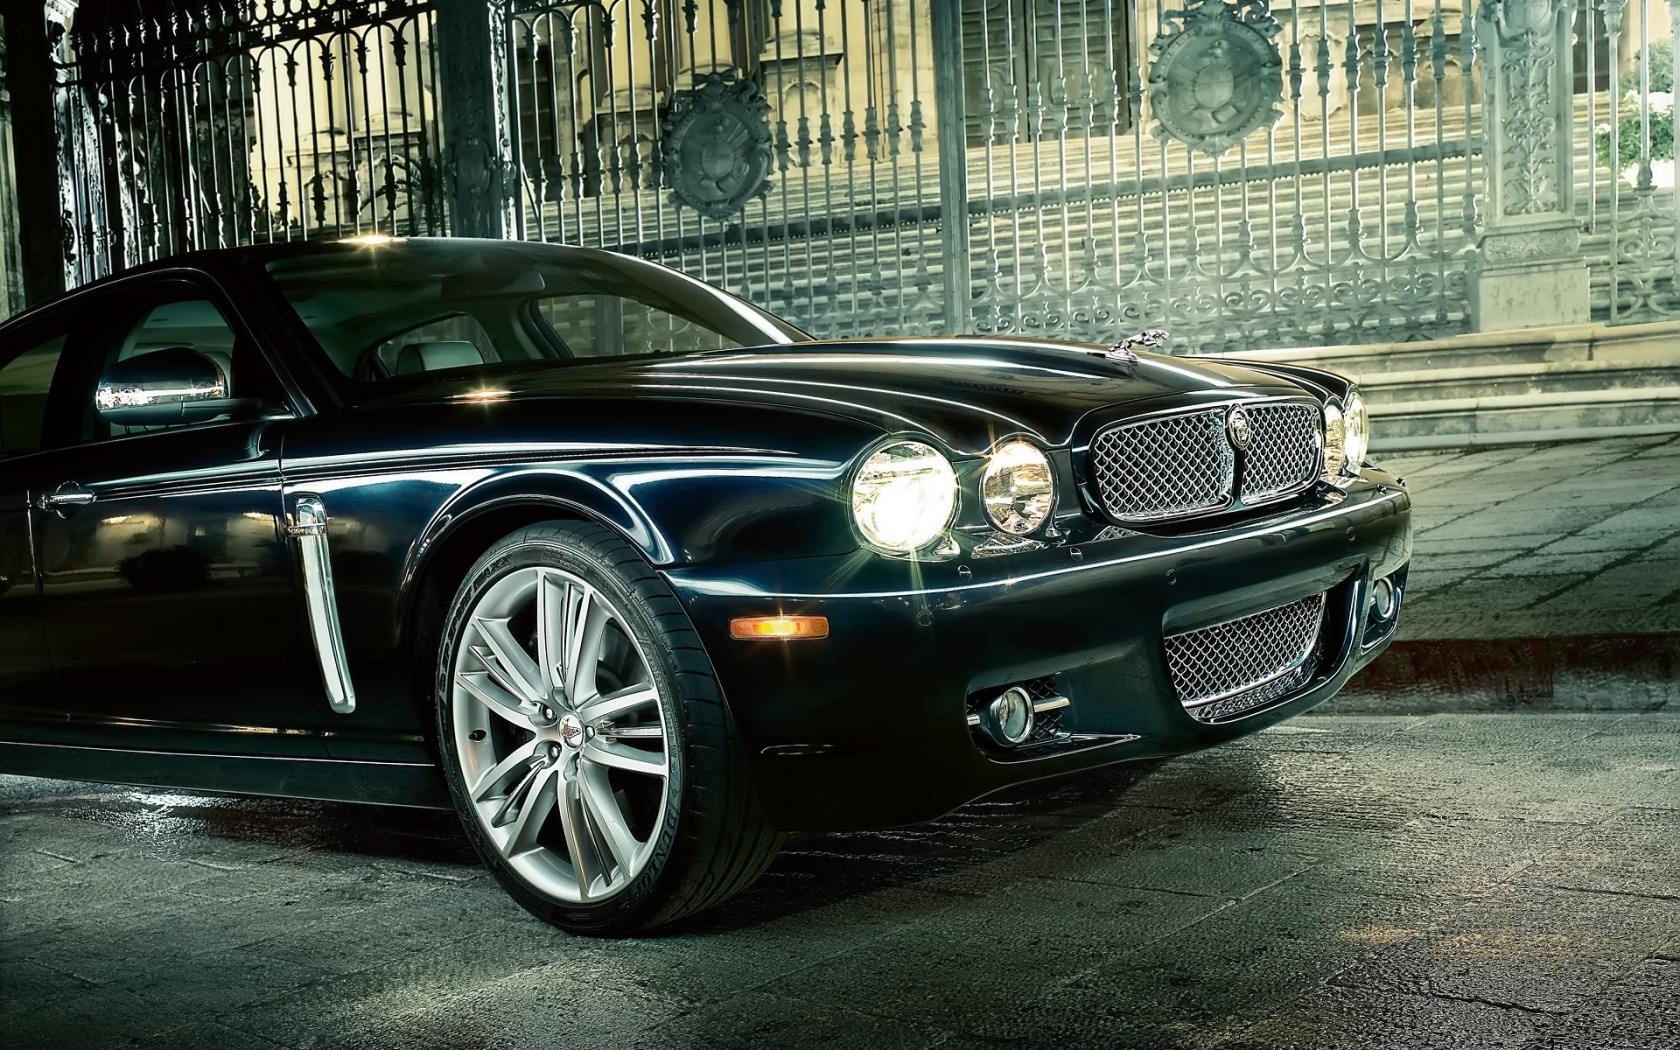 3d обои 2009 Jaguar XJ у забора с ажурными решётками  авто # 18734